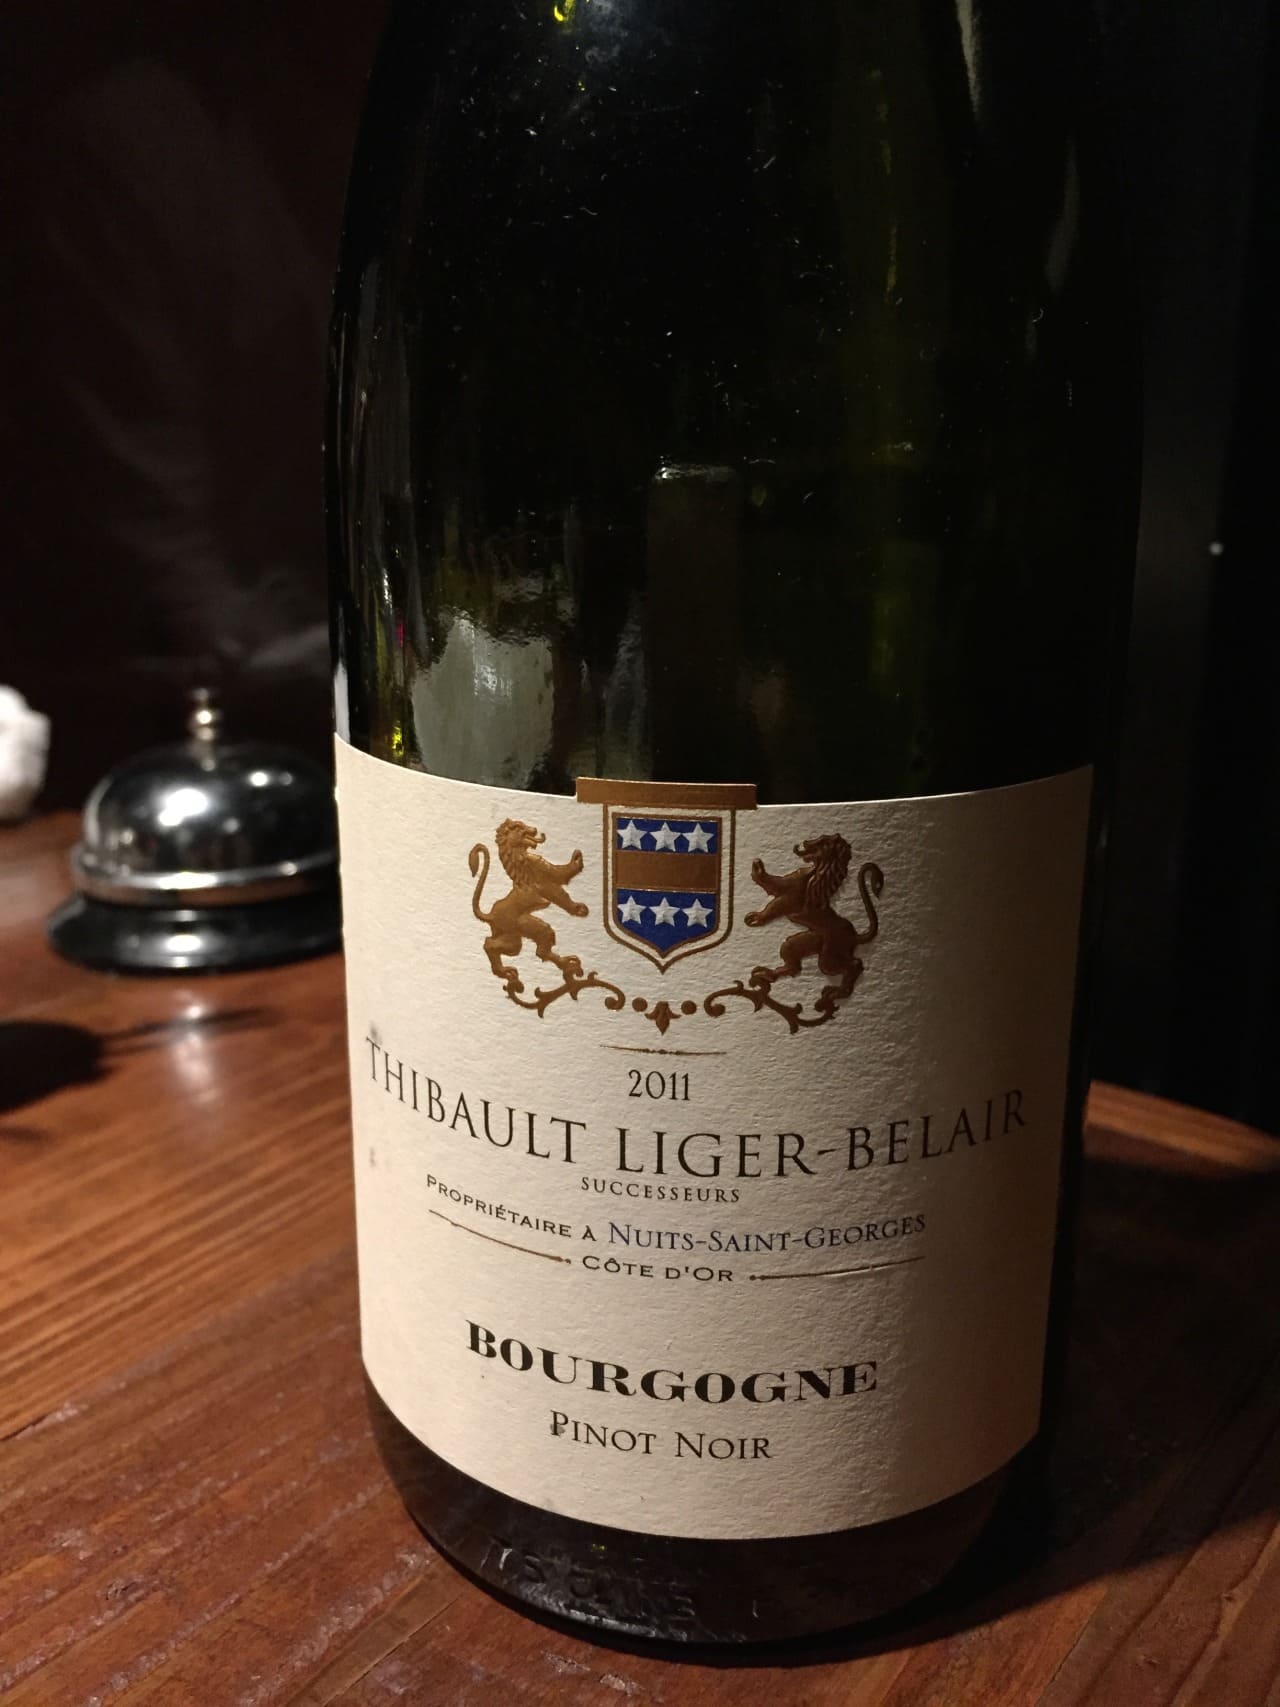 Thibault Liger-Belair Bourgogne Pinot Noir